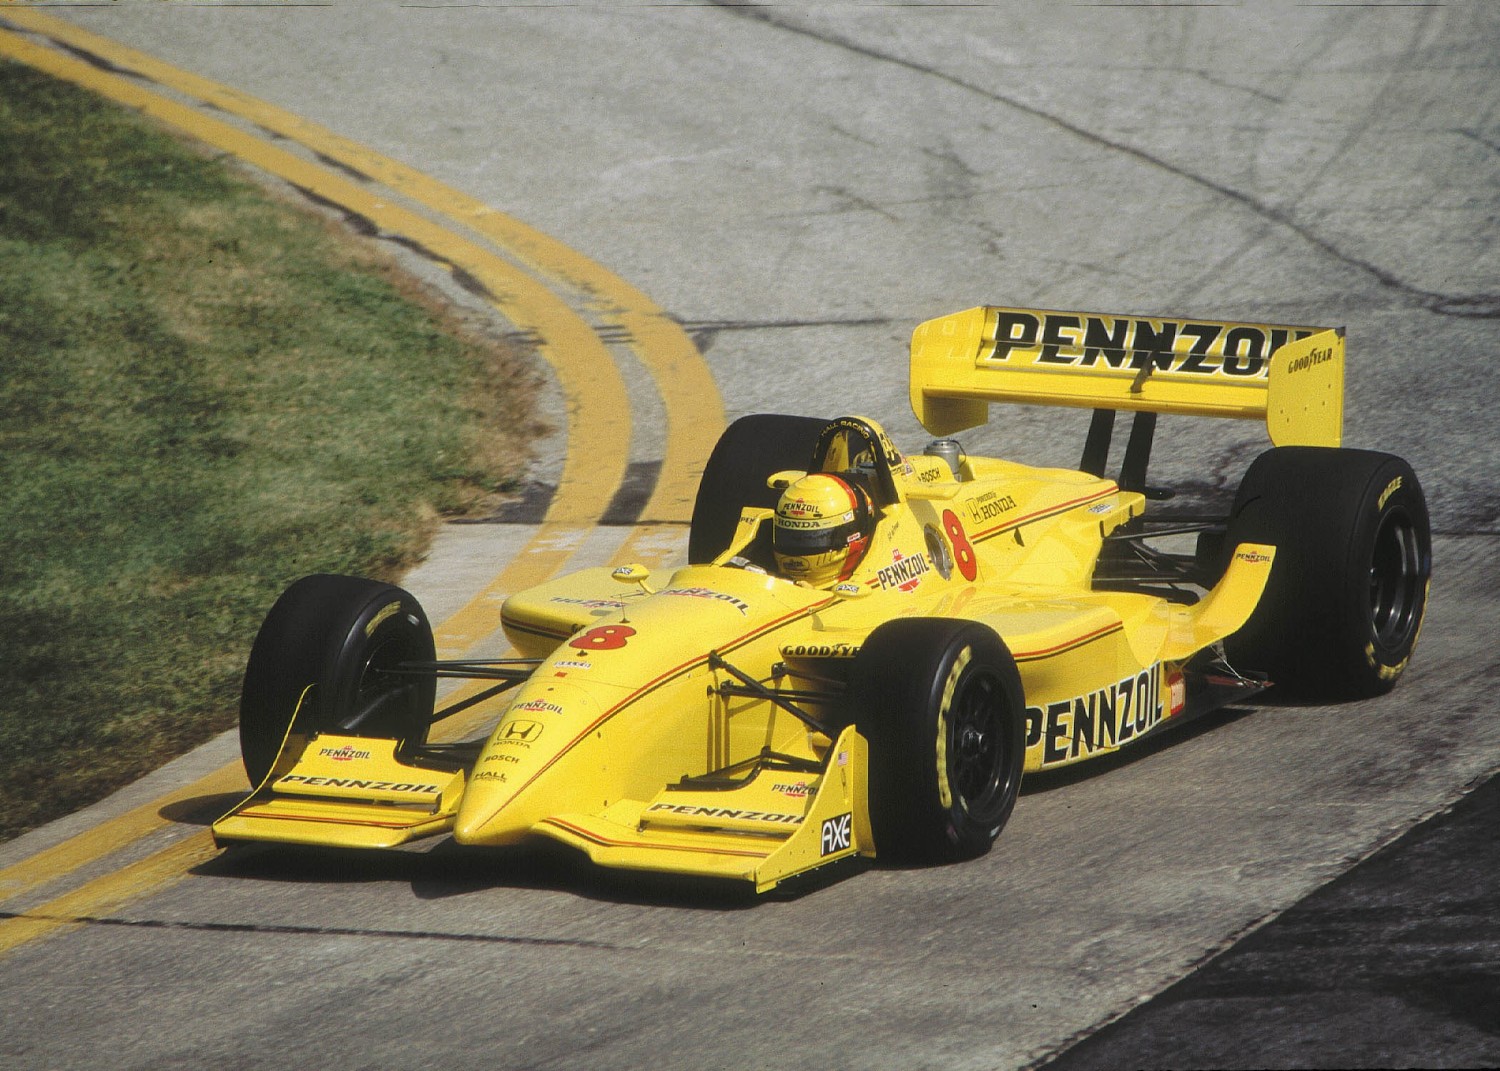 Gil de Ferran driving the Jim Hall Pennzoil Reynard in CART